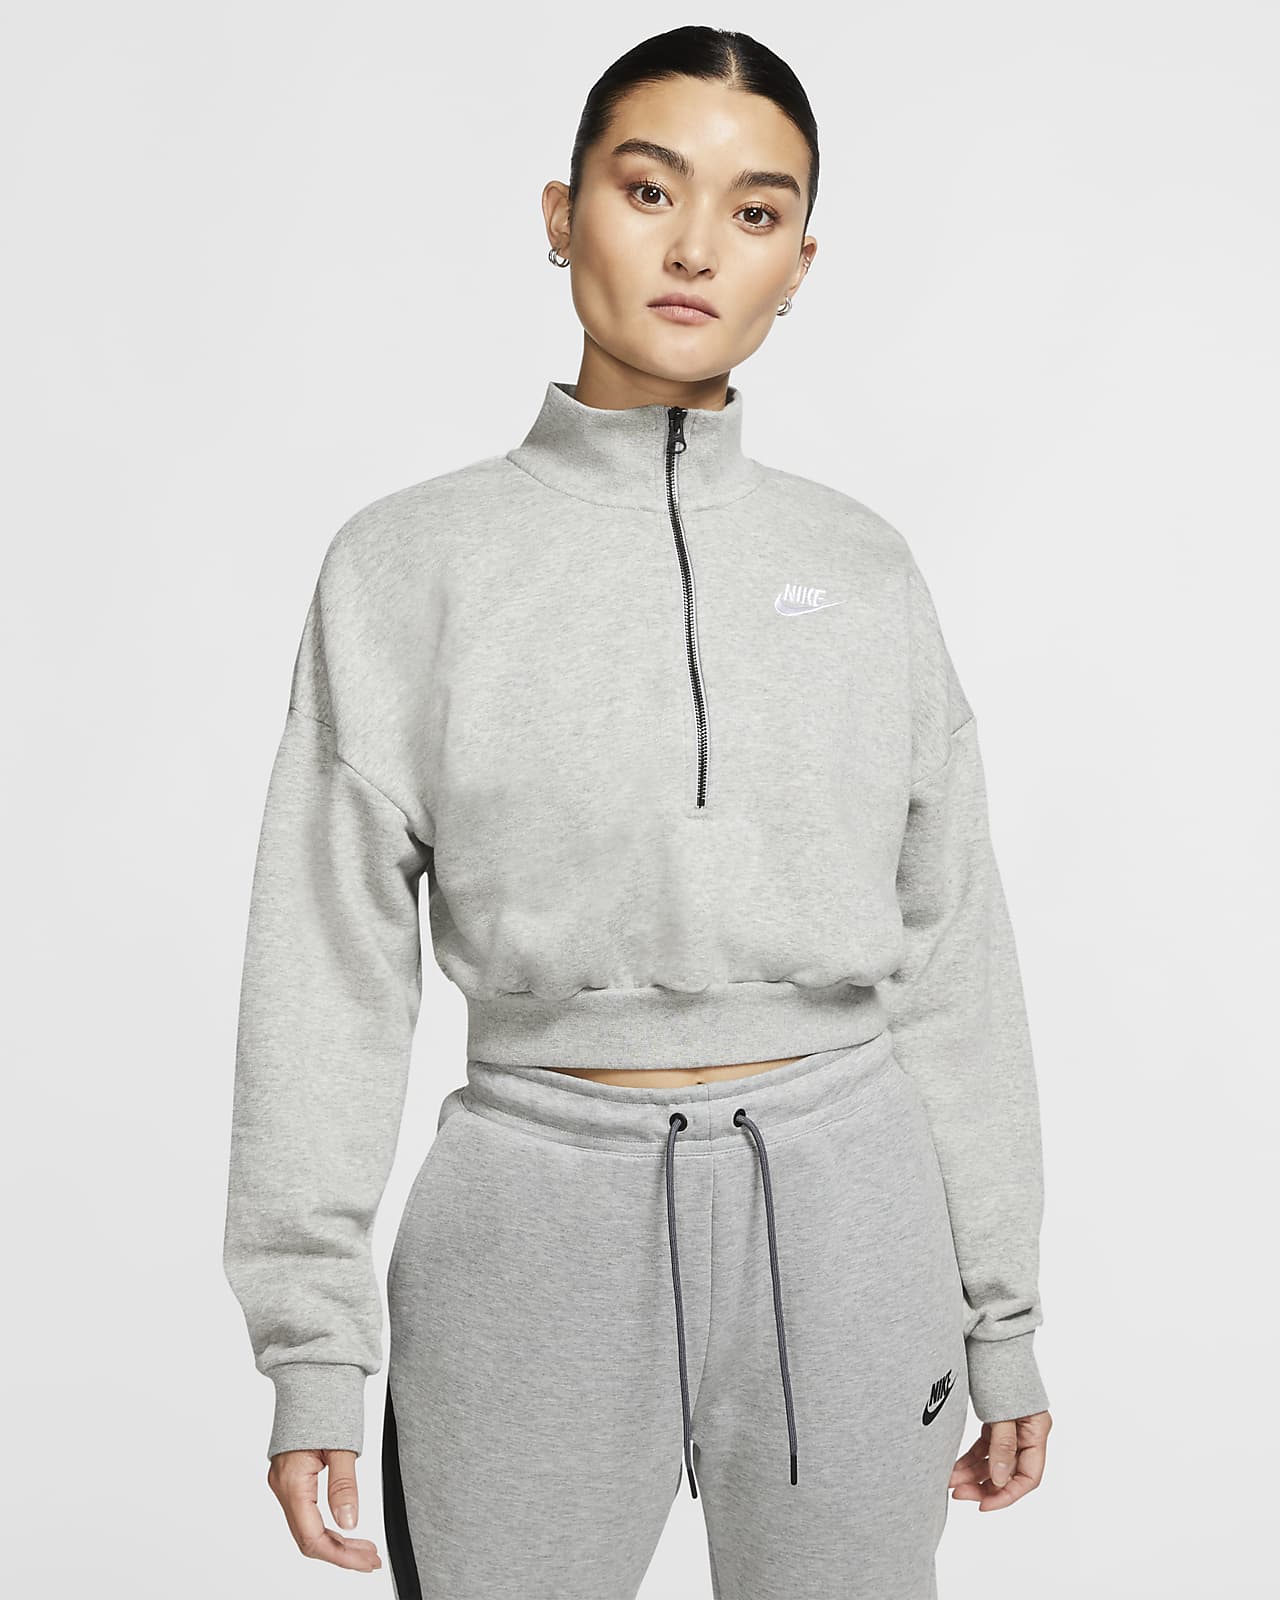 Fleece Long-Sleeve Crop Top. Nike IL